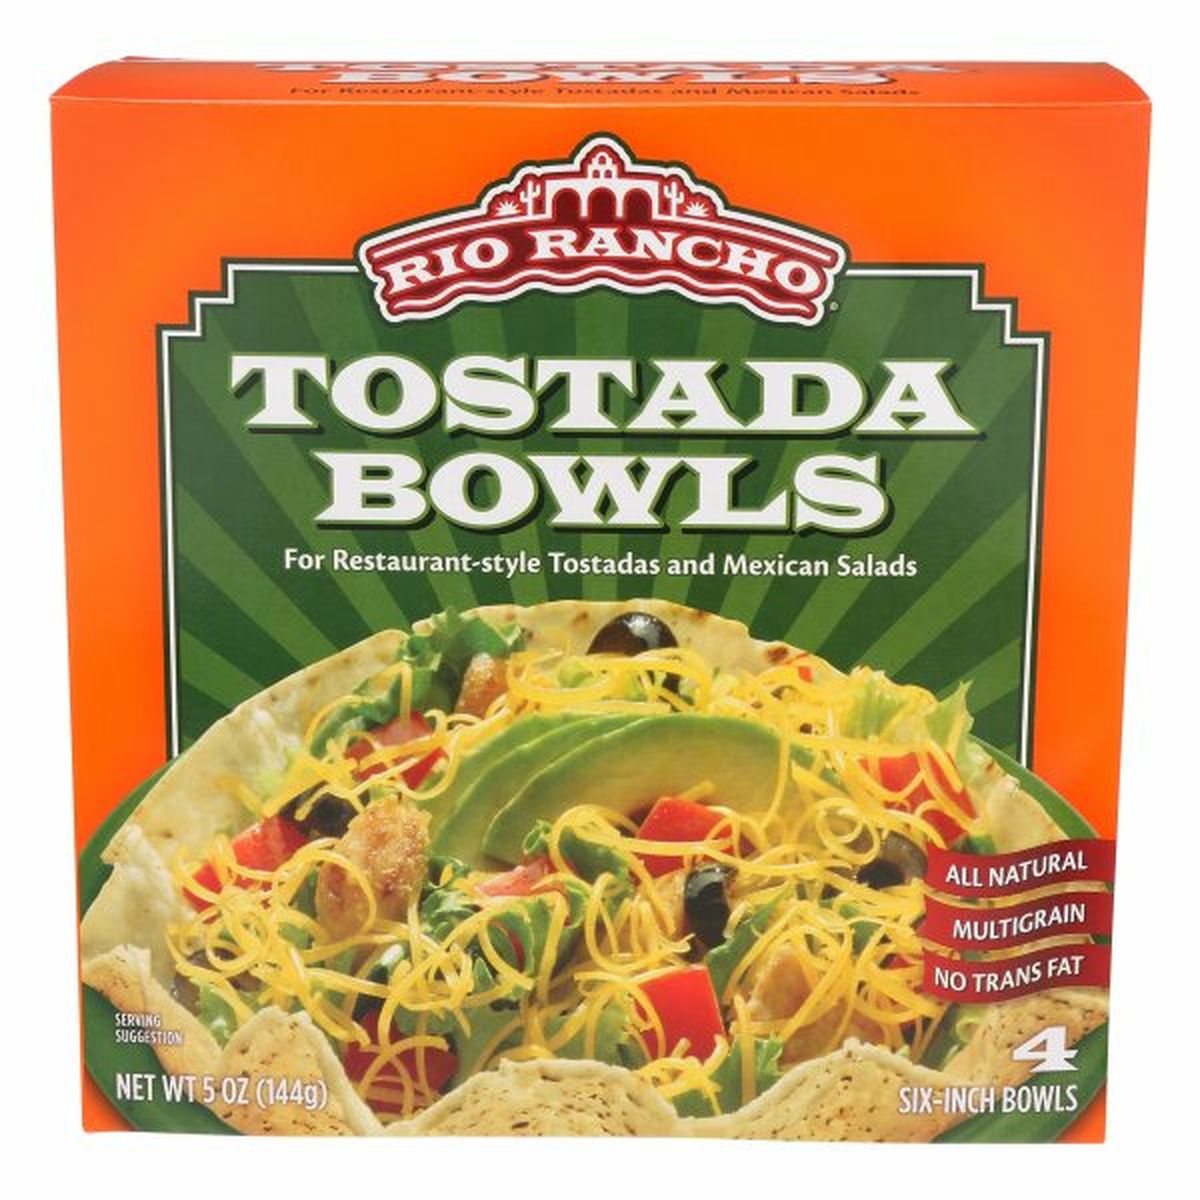 Calories in Rio Rancho Tostada Bowls, Six-Inch Bowls